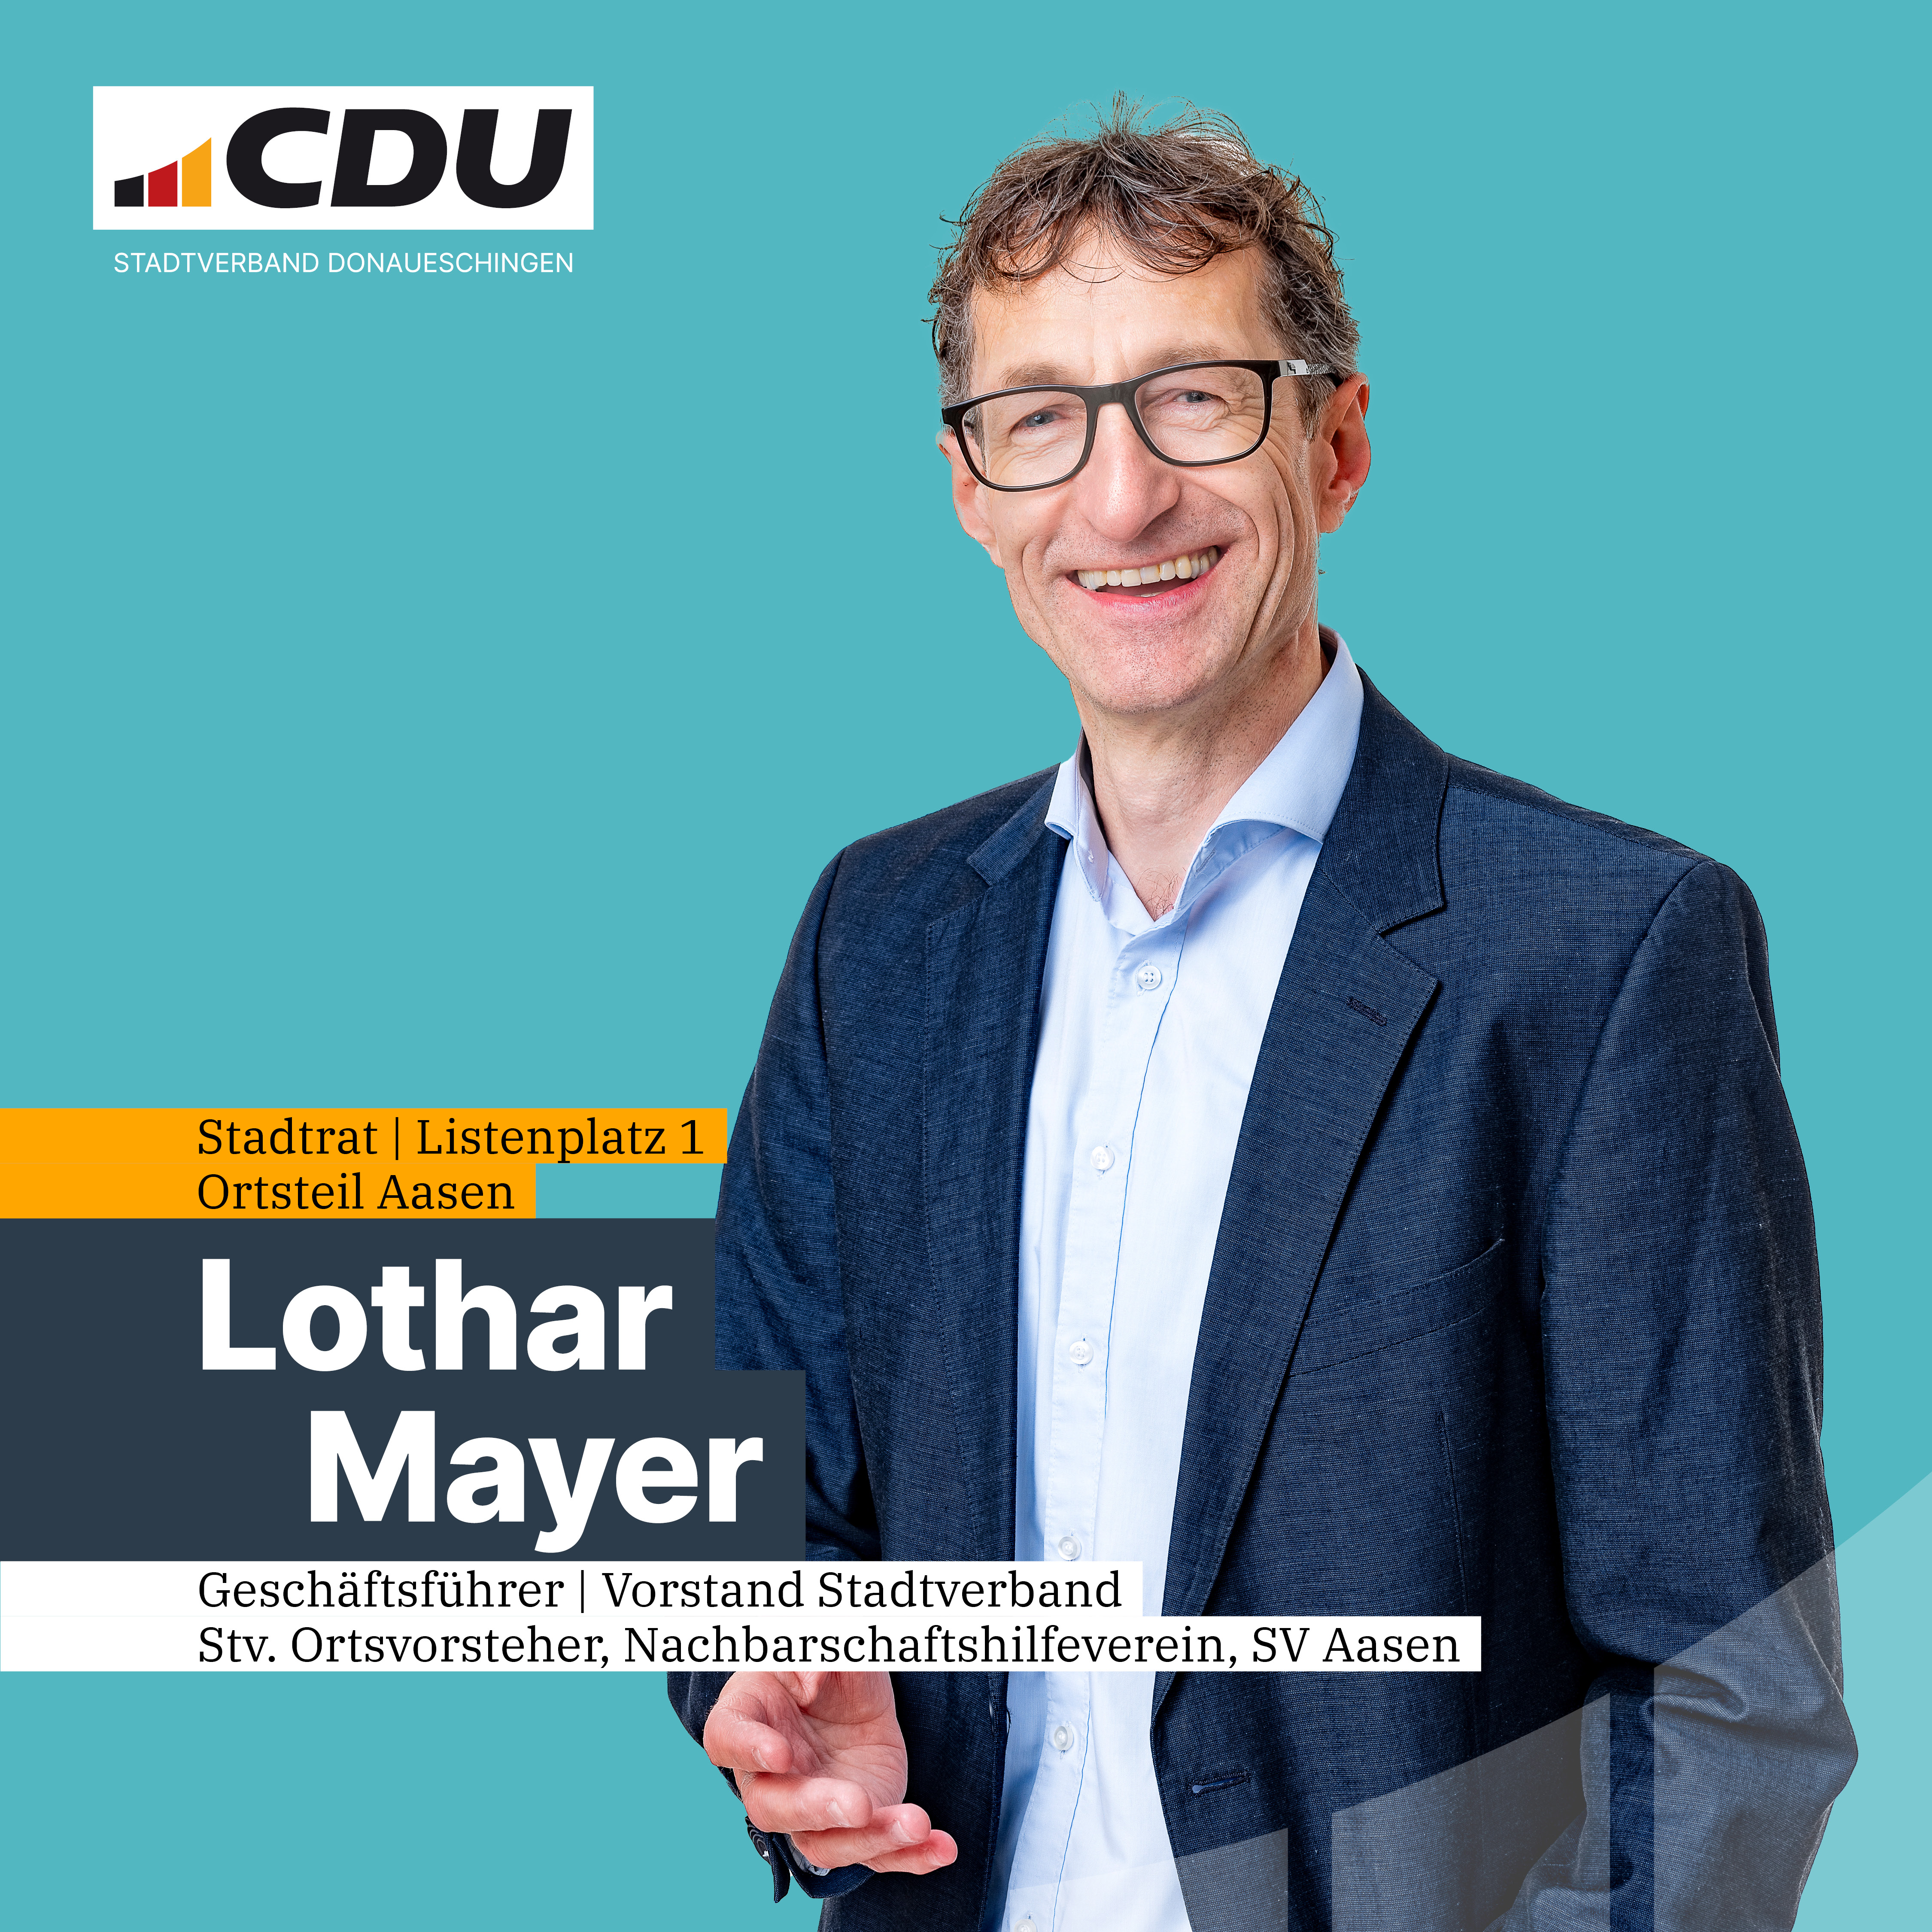  Lothar Mayer